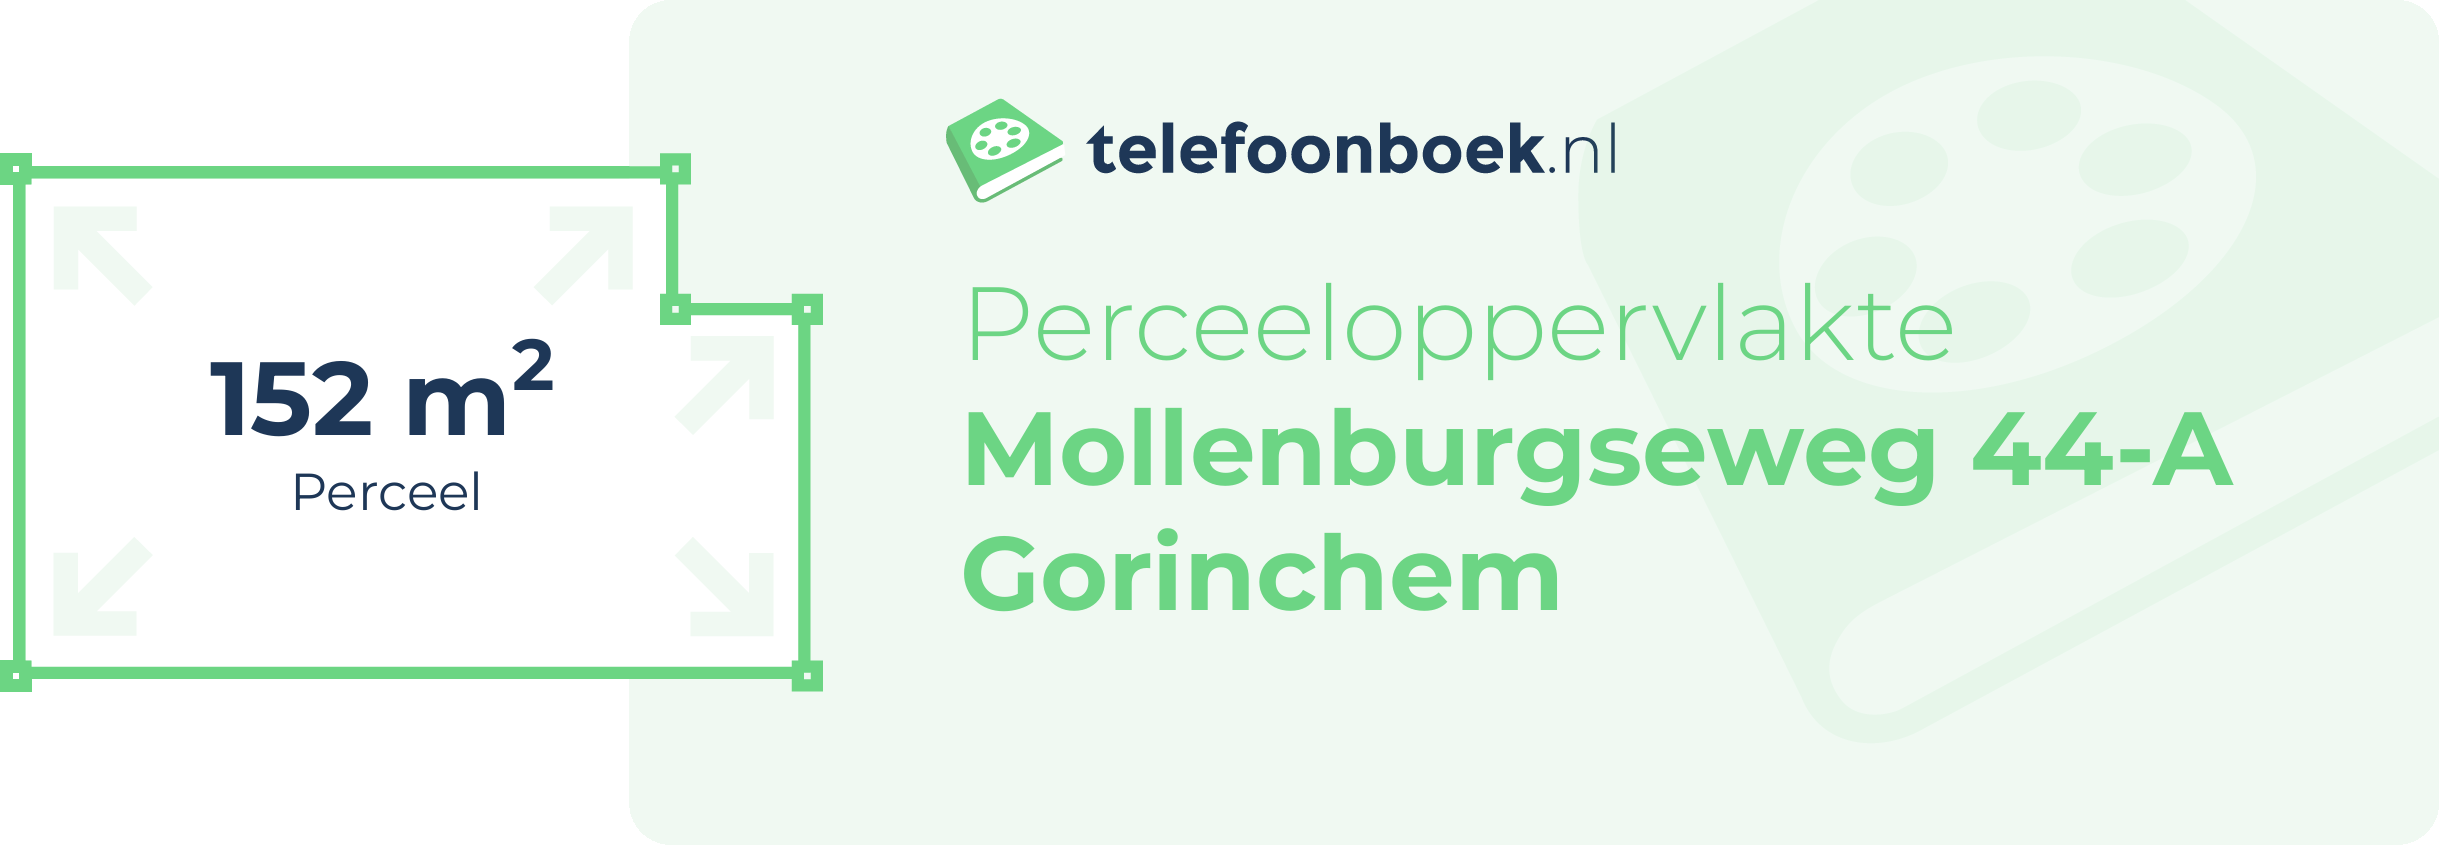 Perceeloppervlakte Mollenburgseweg 44-A Gorinchem